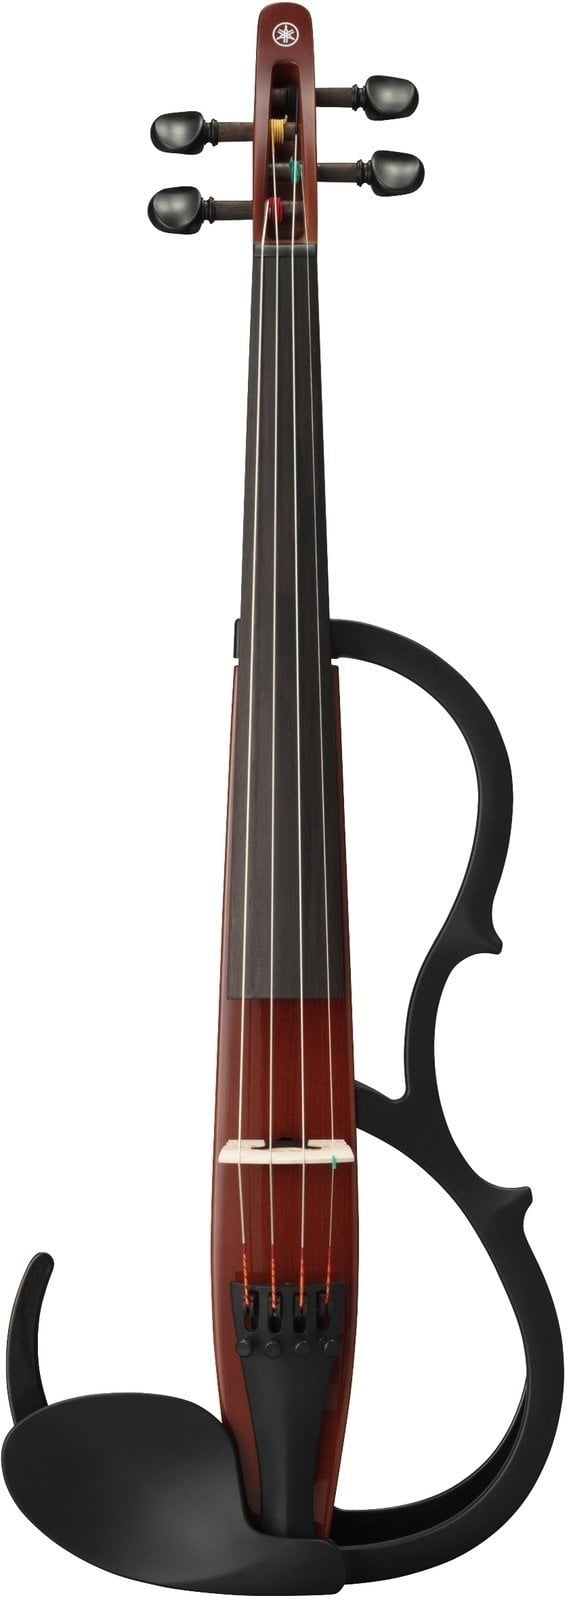 Electric Violin Yamaha YSV104 4/4 Electric Violin